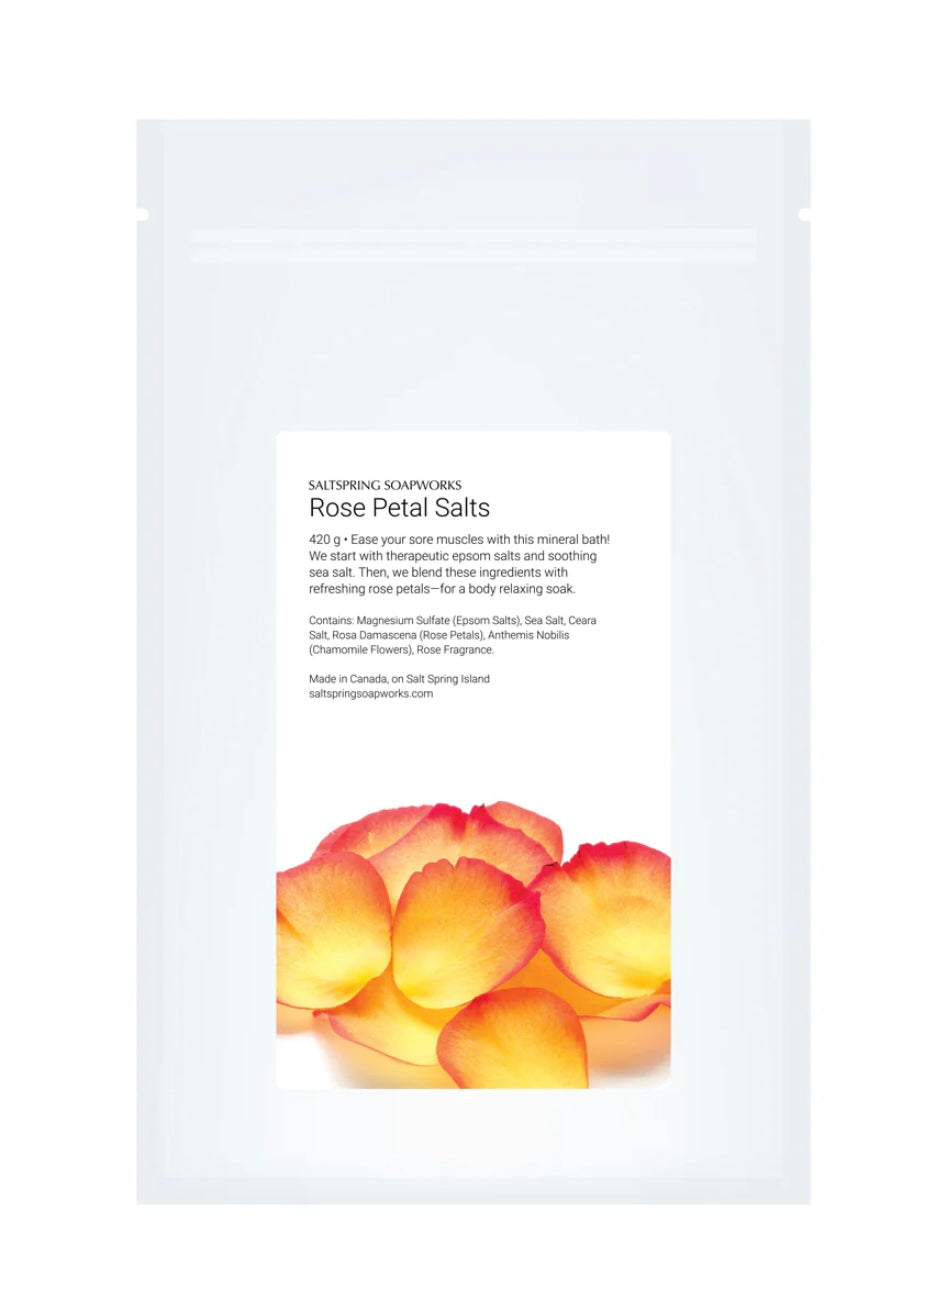 Rose Petal Bath Salts